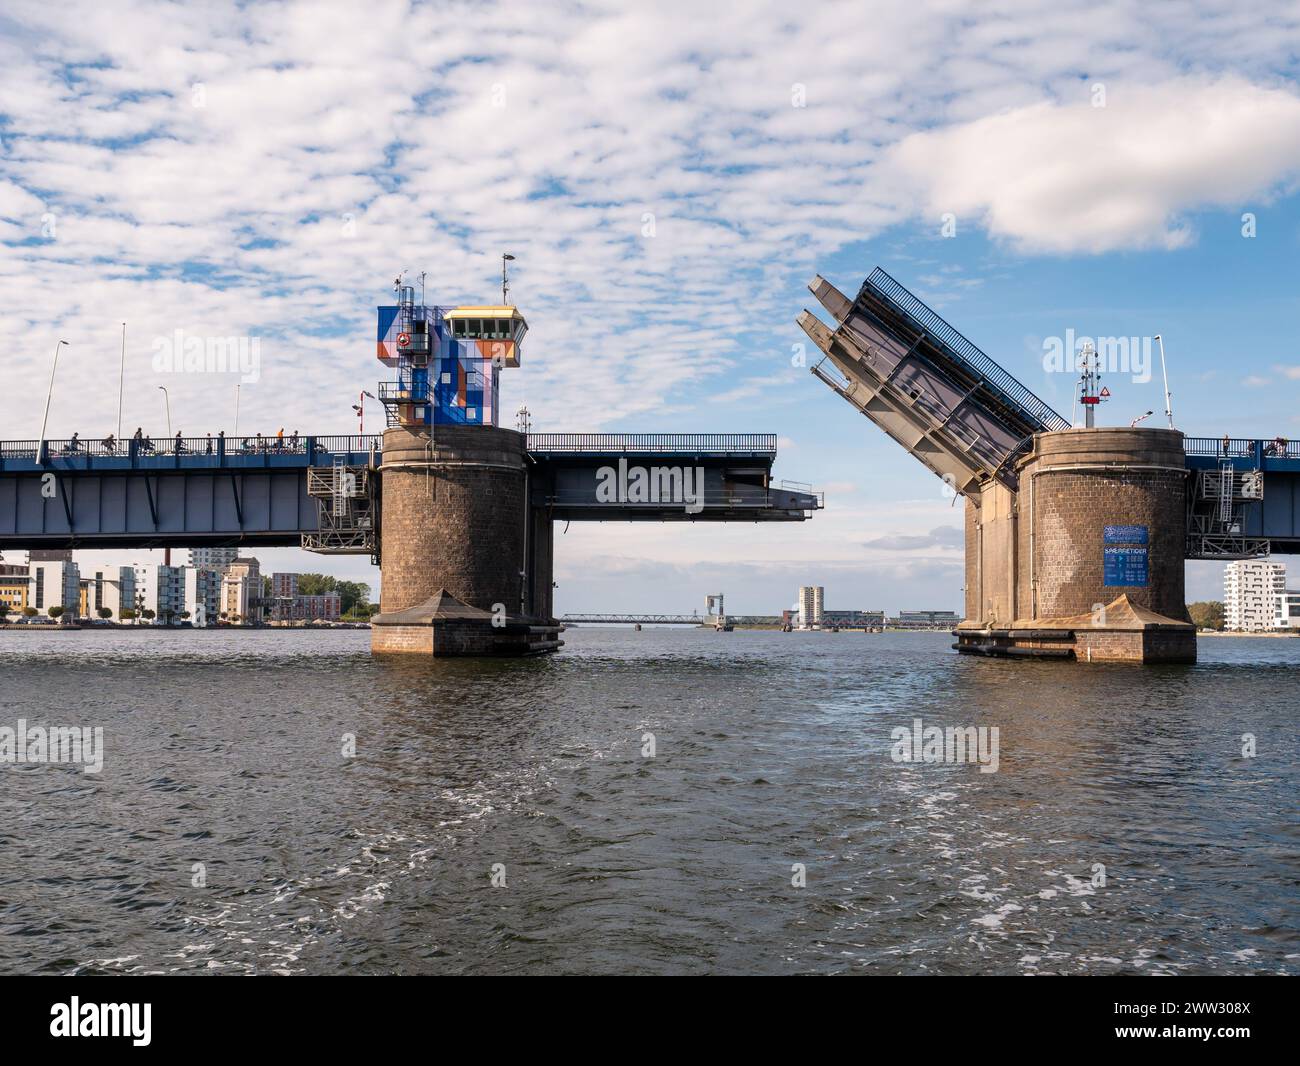 Limfjordsbroen, ponte sul Limfjord, che collega Aalborg e Nørresundby, Nordjylland, Danimarca Foto Stock